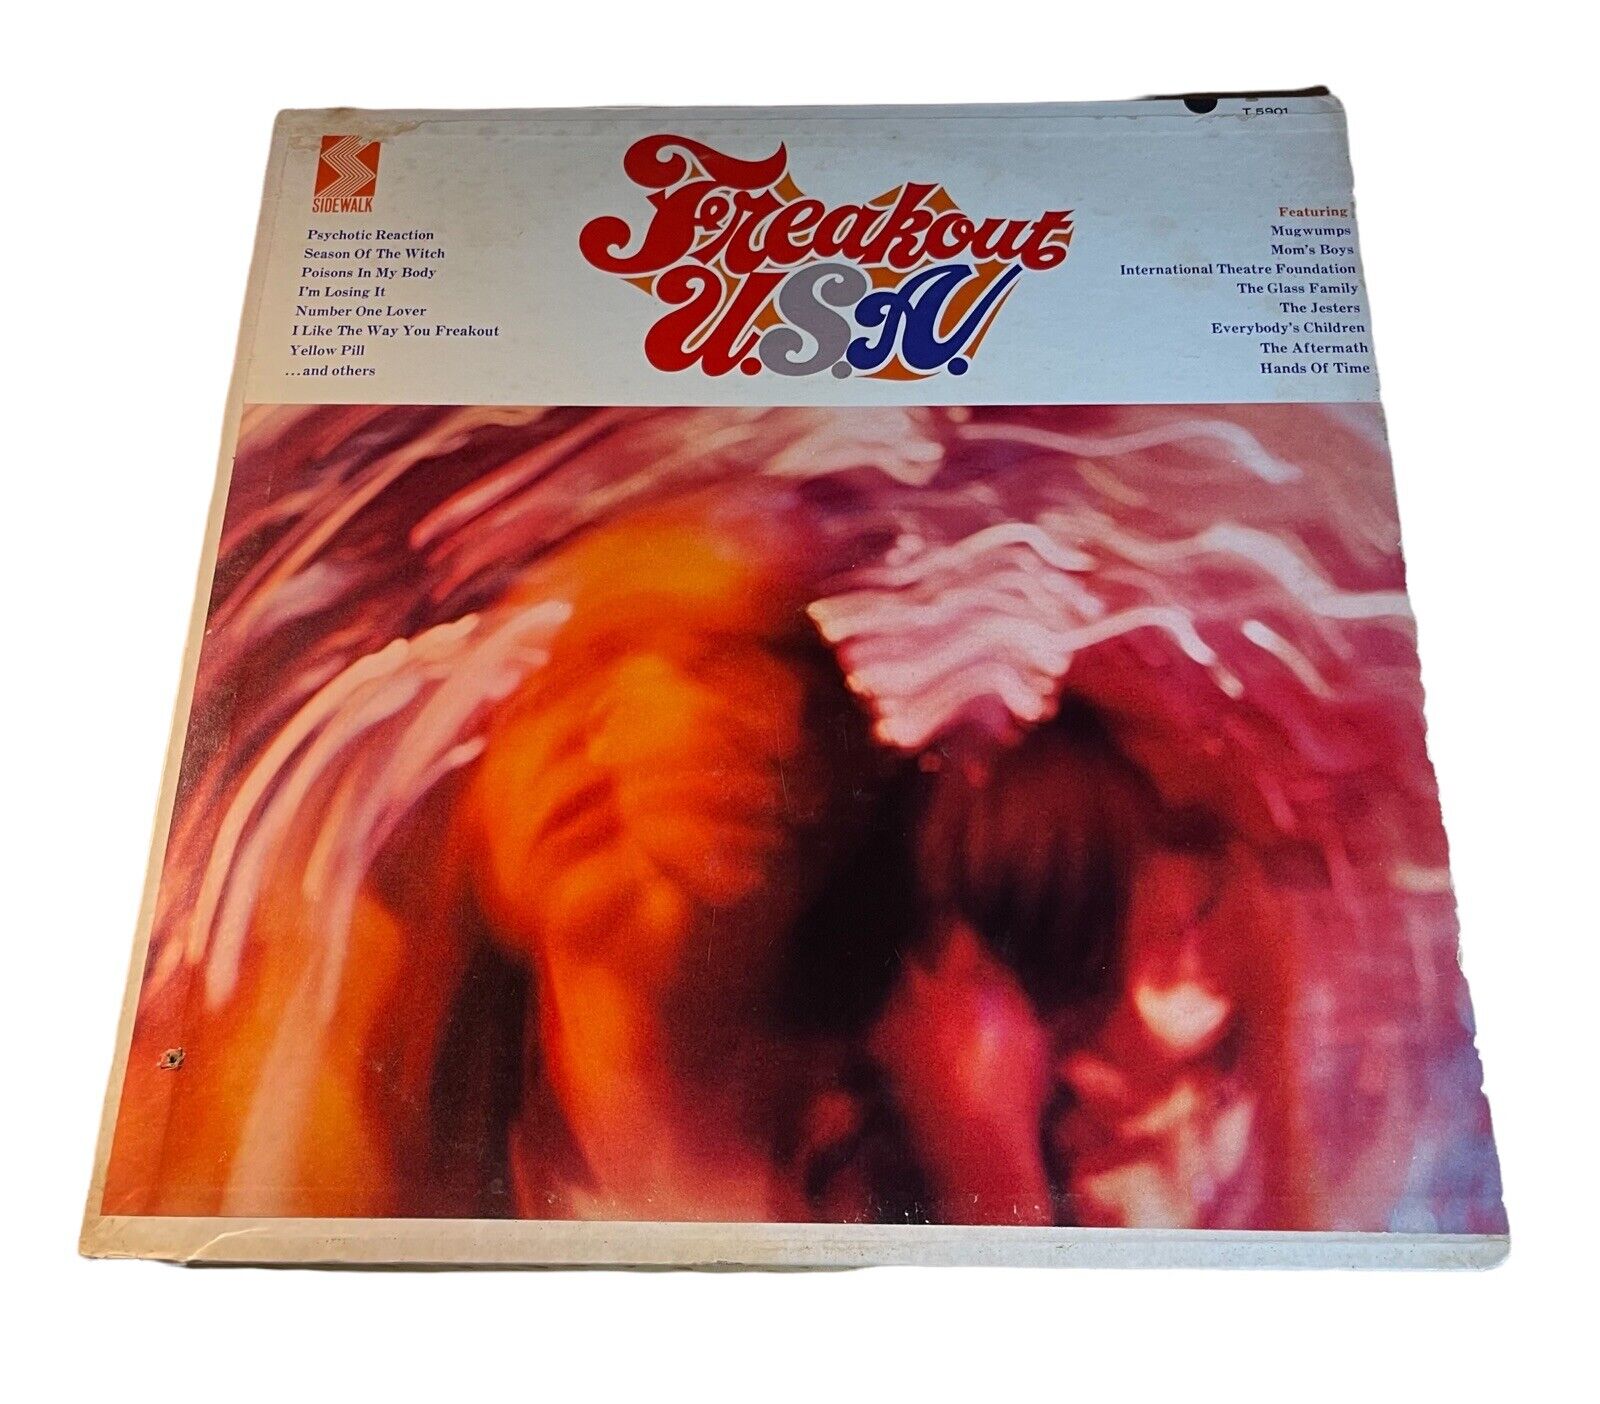 Freakout U.S.A. 1967 Sidewalk Vinyl LP T-5901 Psyche Rock VG+/VG+